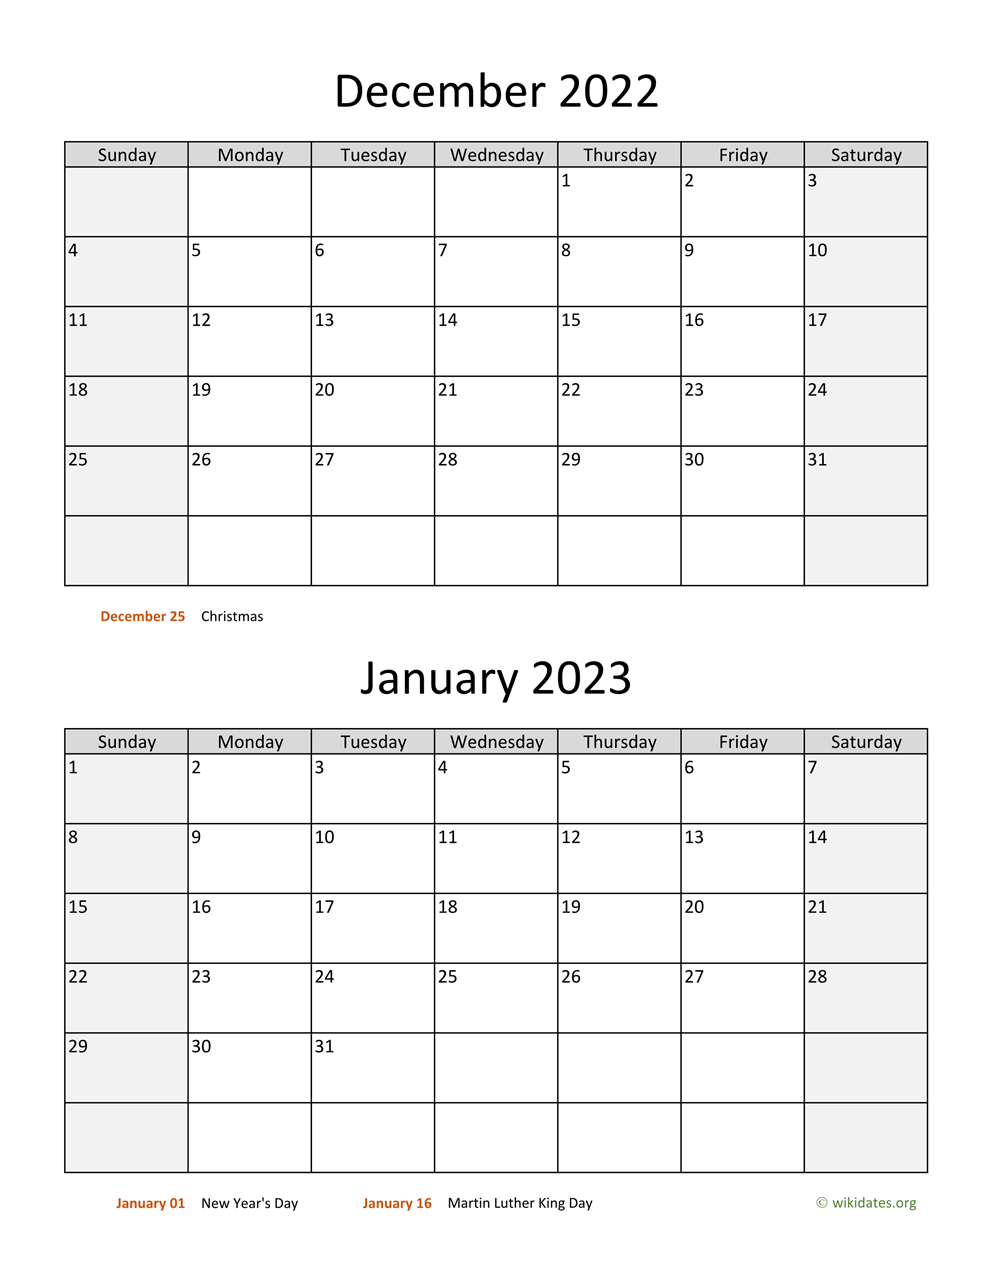 December 2022 And January 2023 Calendar | Wikidates.org